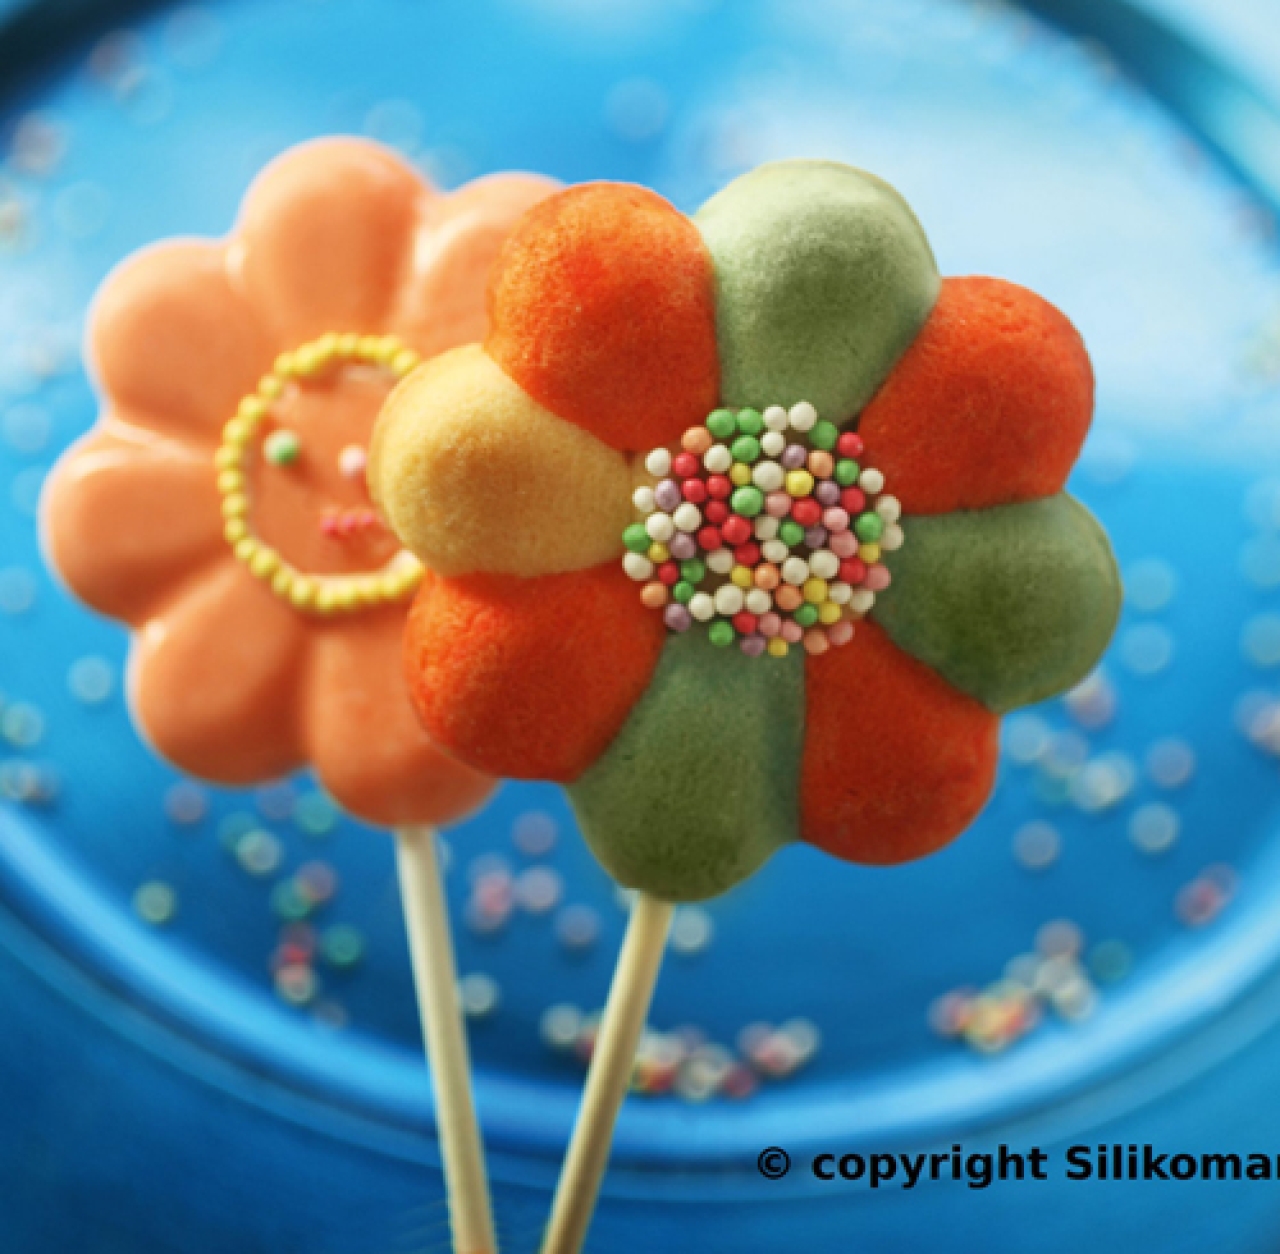 Silikon-Backform "Blumen-Cakepops" Durchmesser 7,5 cm